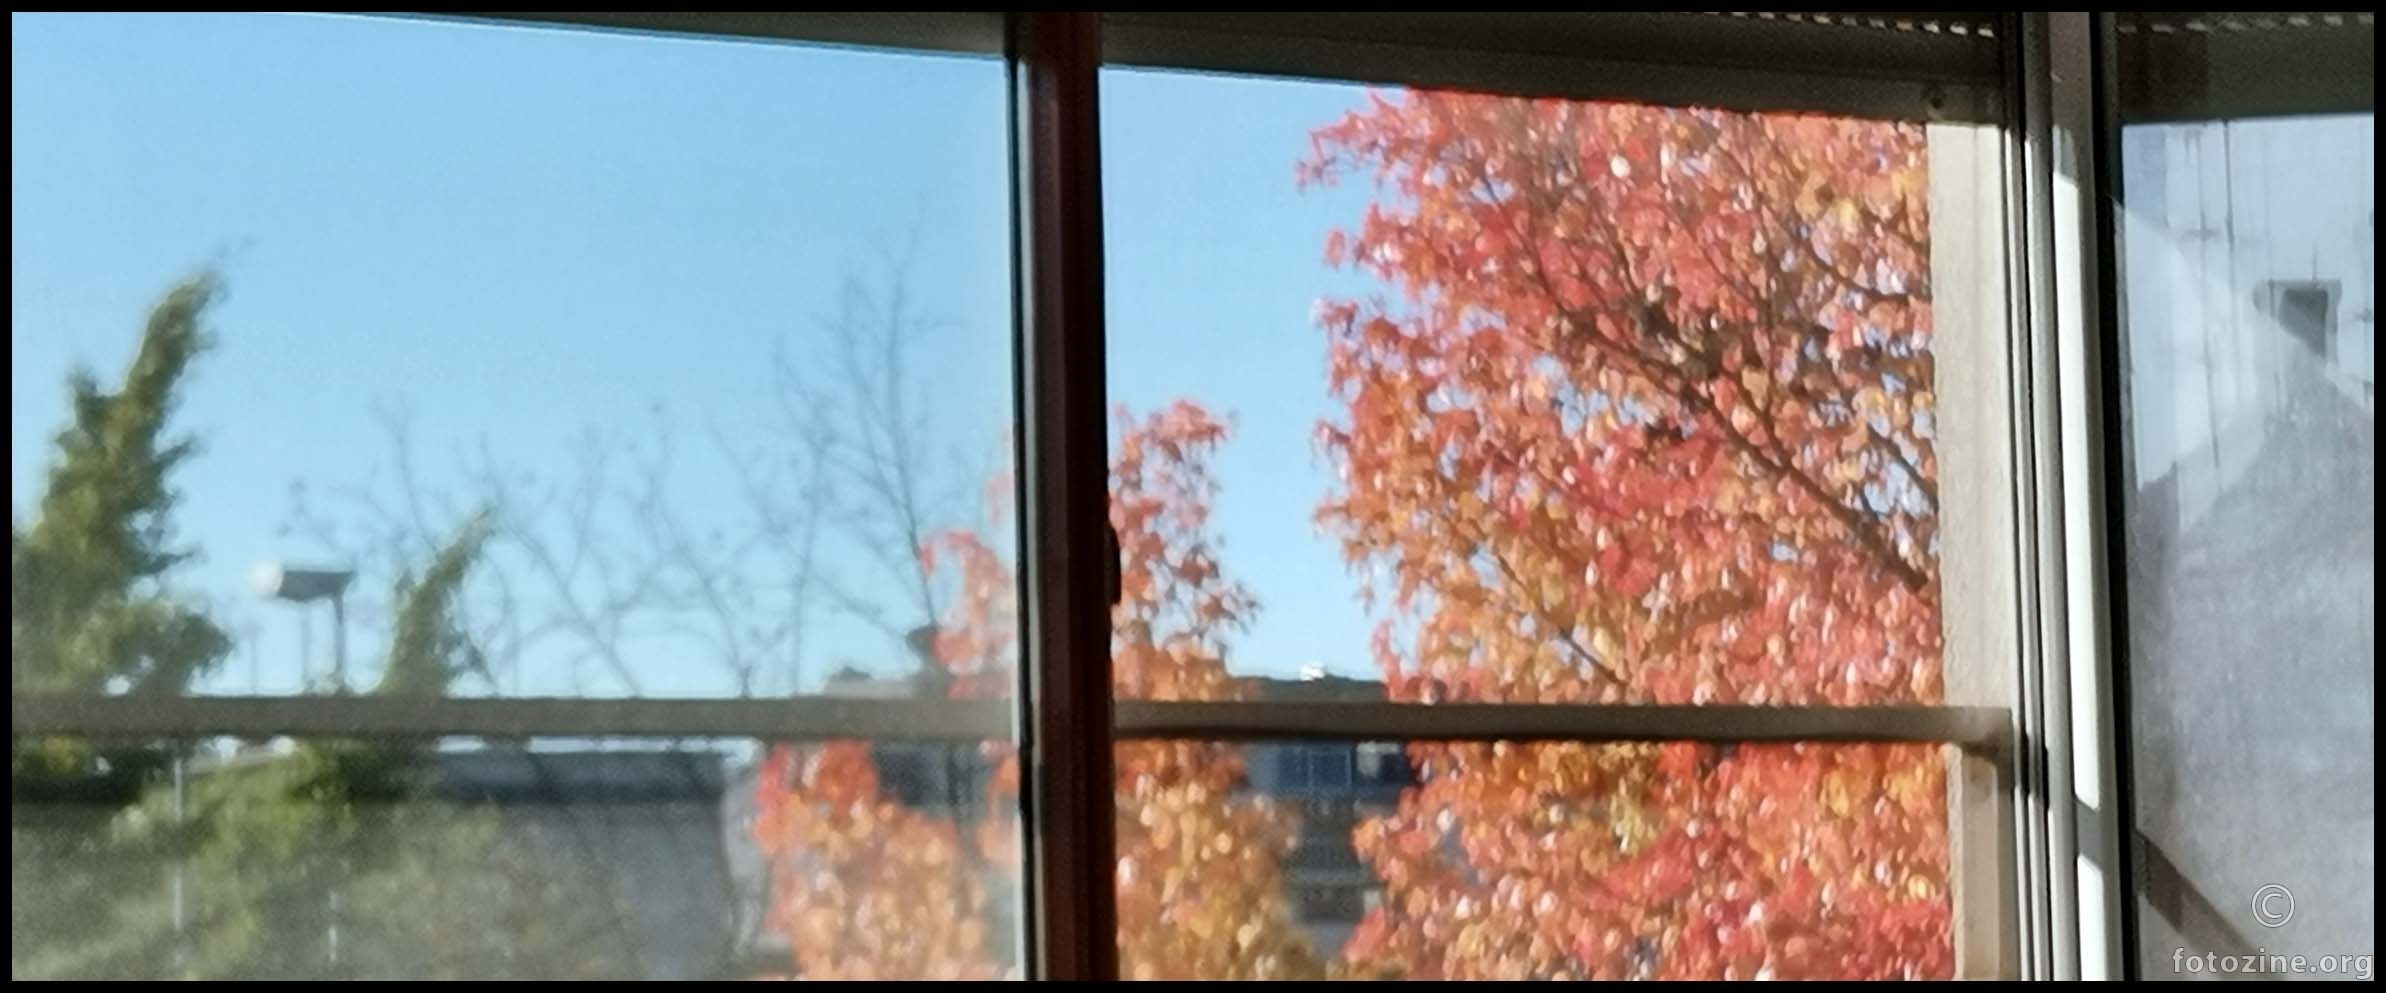 jesen stigla pred prozore moje sobe